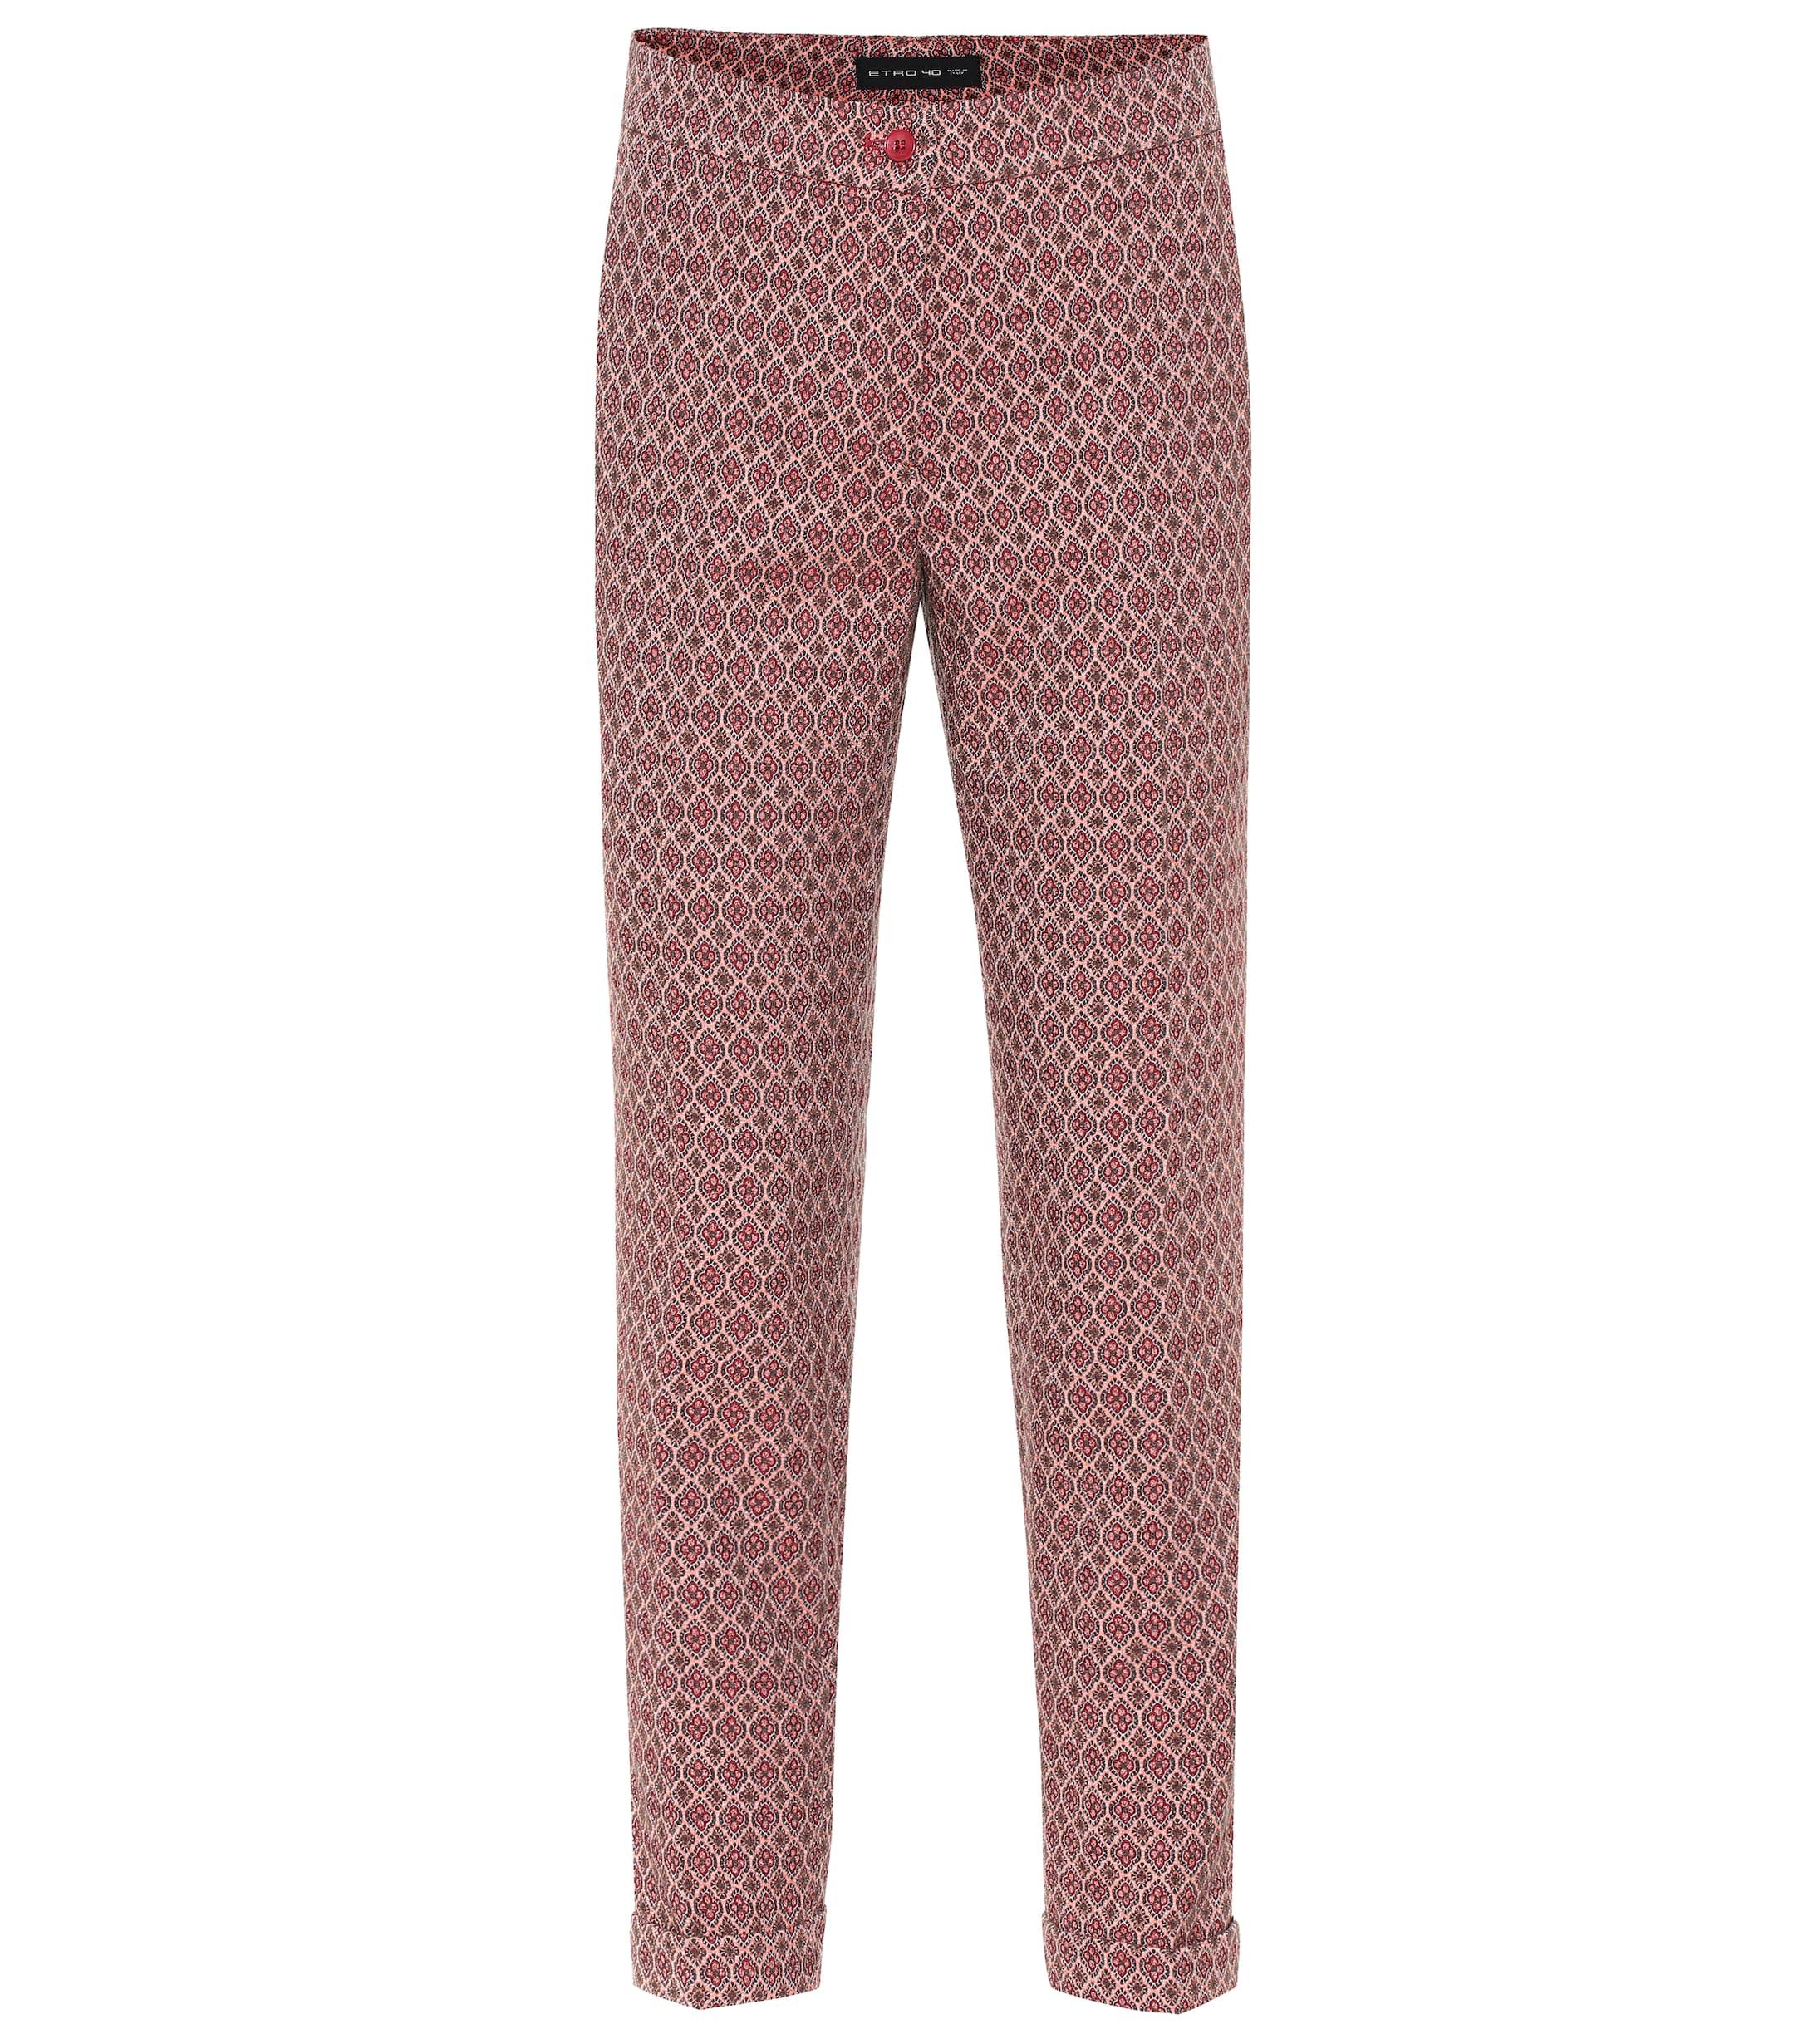 Etro Wool-blend Jacquard Skinny Pants in Red - Lyst